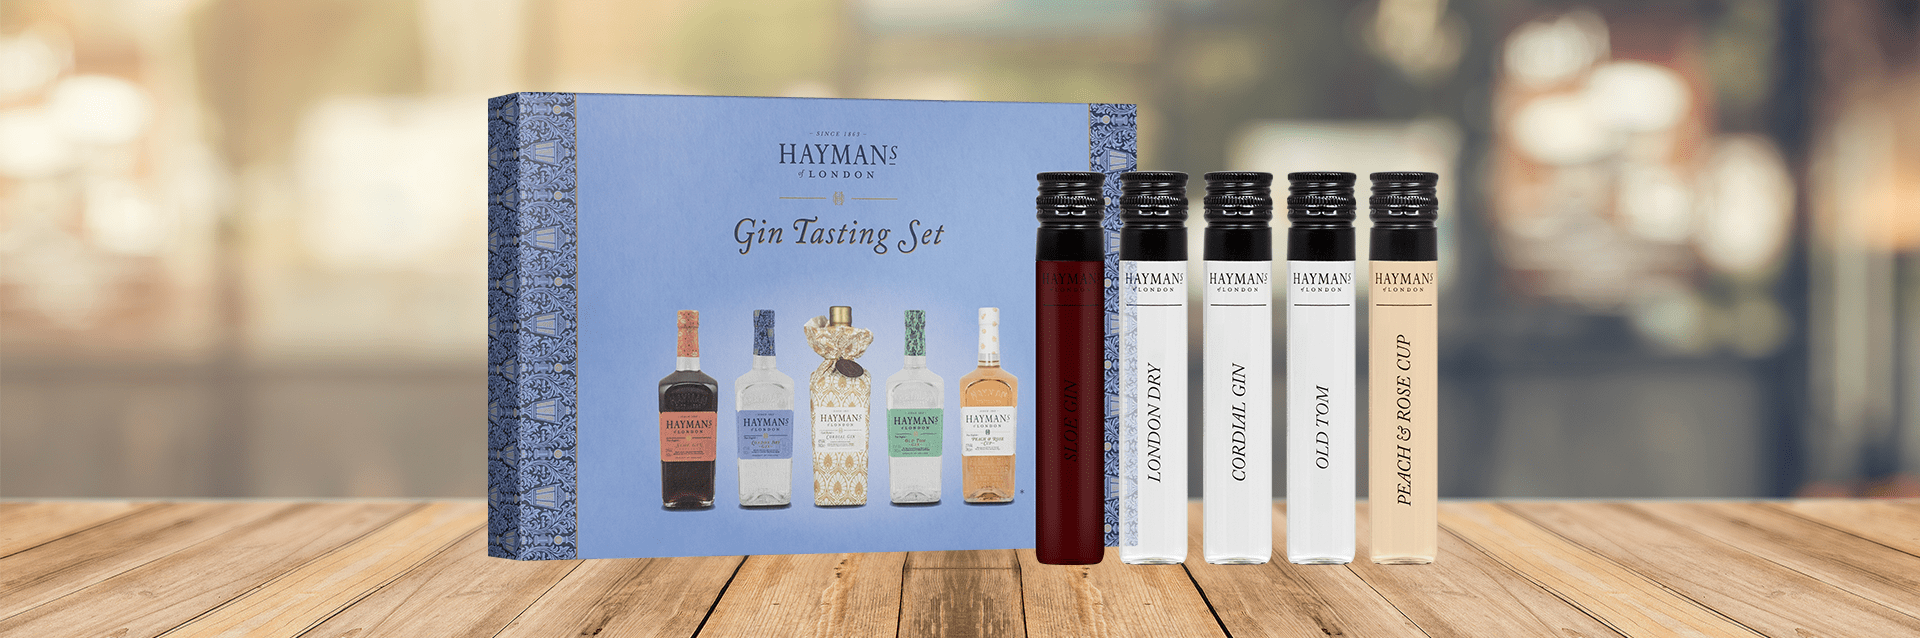 Hayman\'s Madre Sierra Set Tasting Gin -